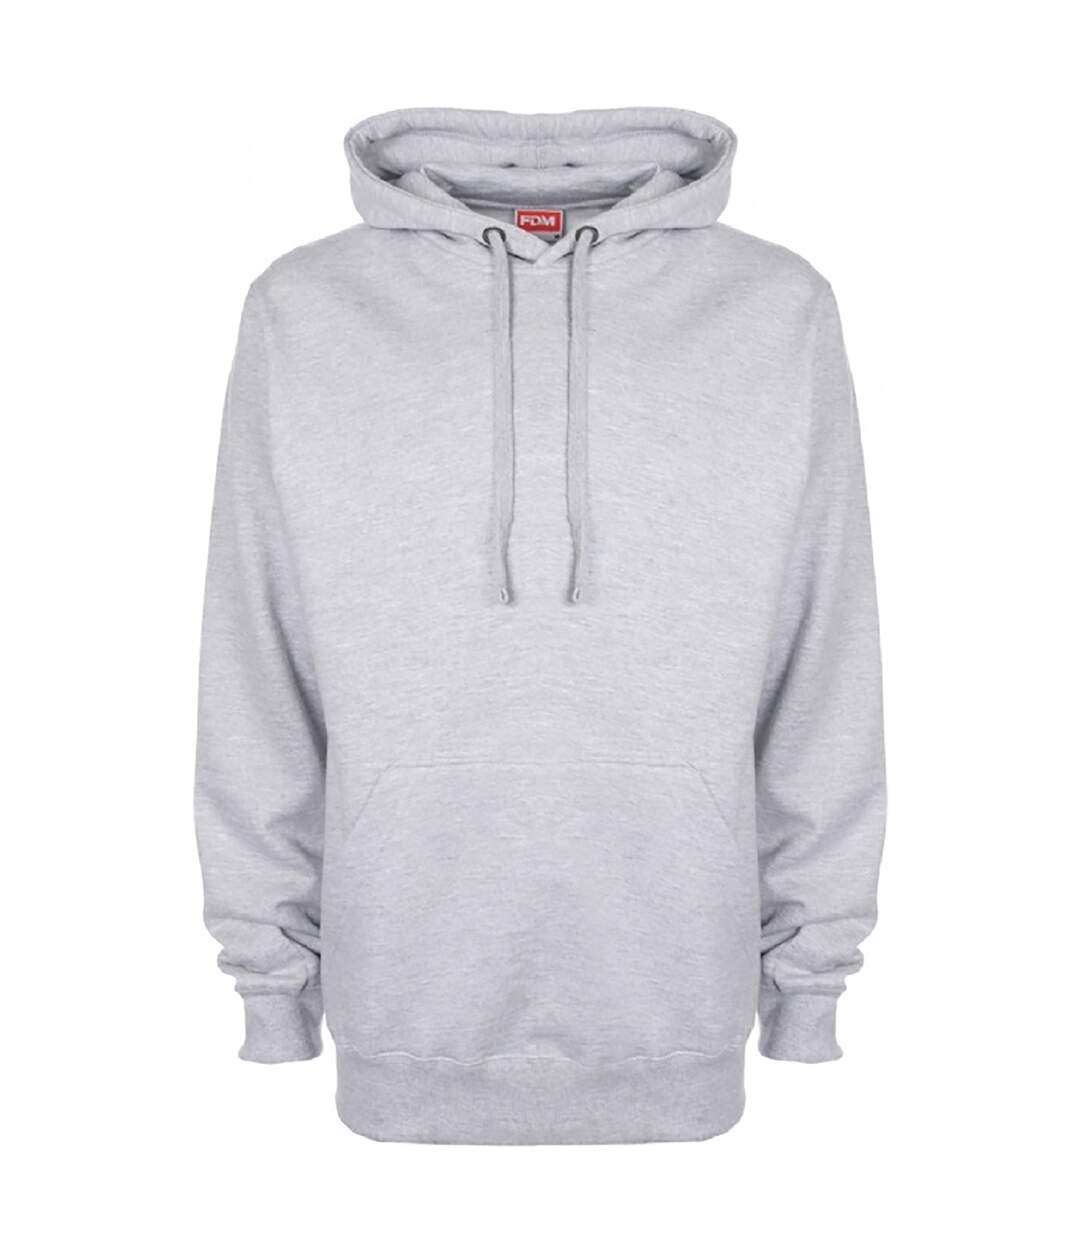 FDM Unisex Plain Original Hooded Sweatshirt / Hoodie (300 GSM) (Heather Grey)